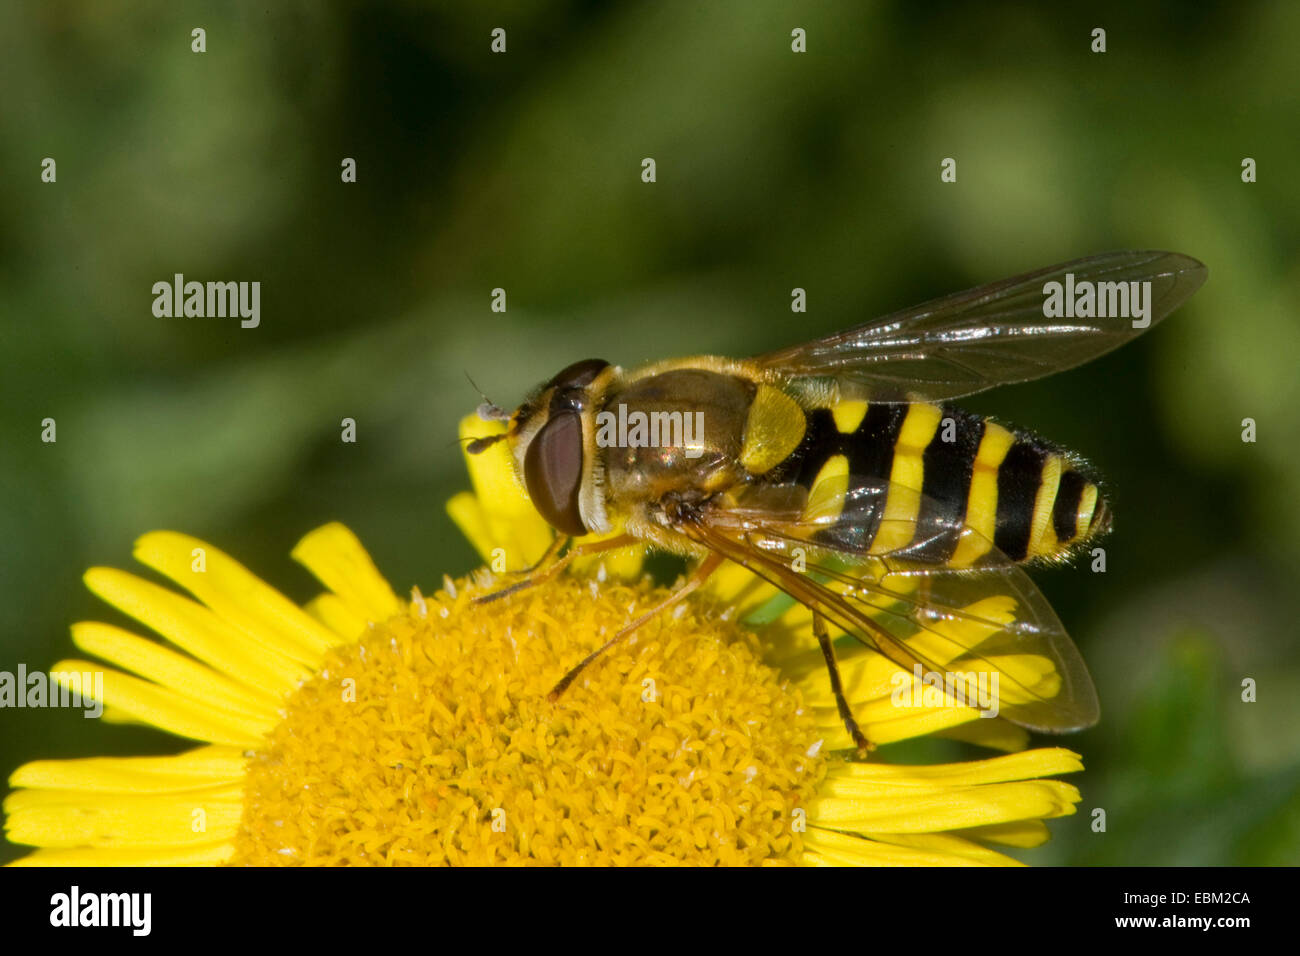 Hover Fly, groseille bagués commun Hoverfly (Syrphus ribesii), assis sur une fleur jaune, Allemagne Banque D'Images